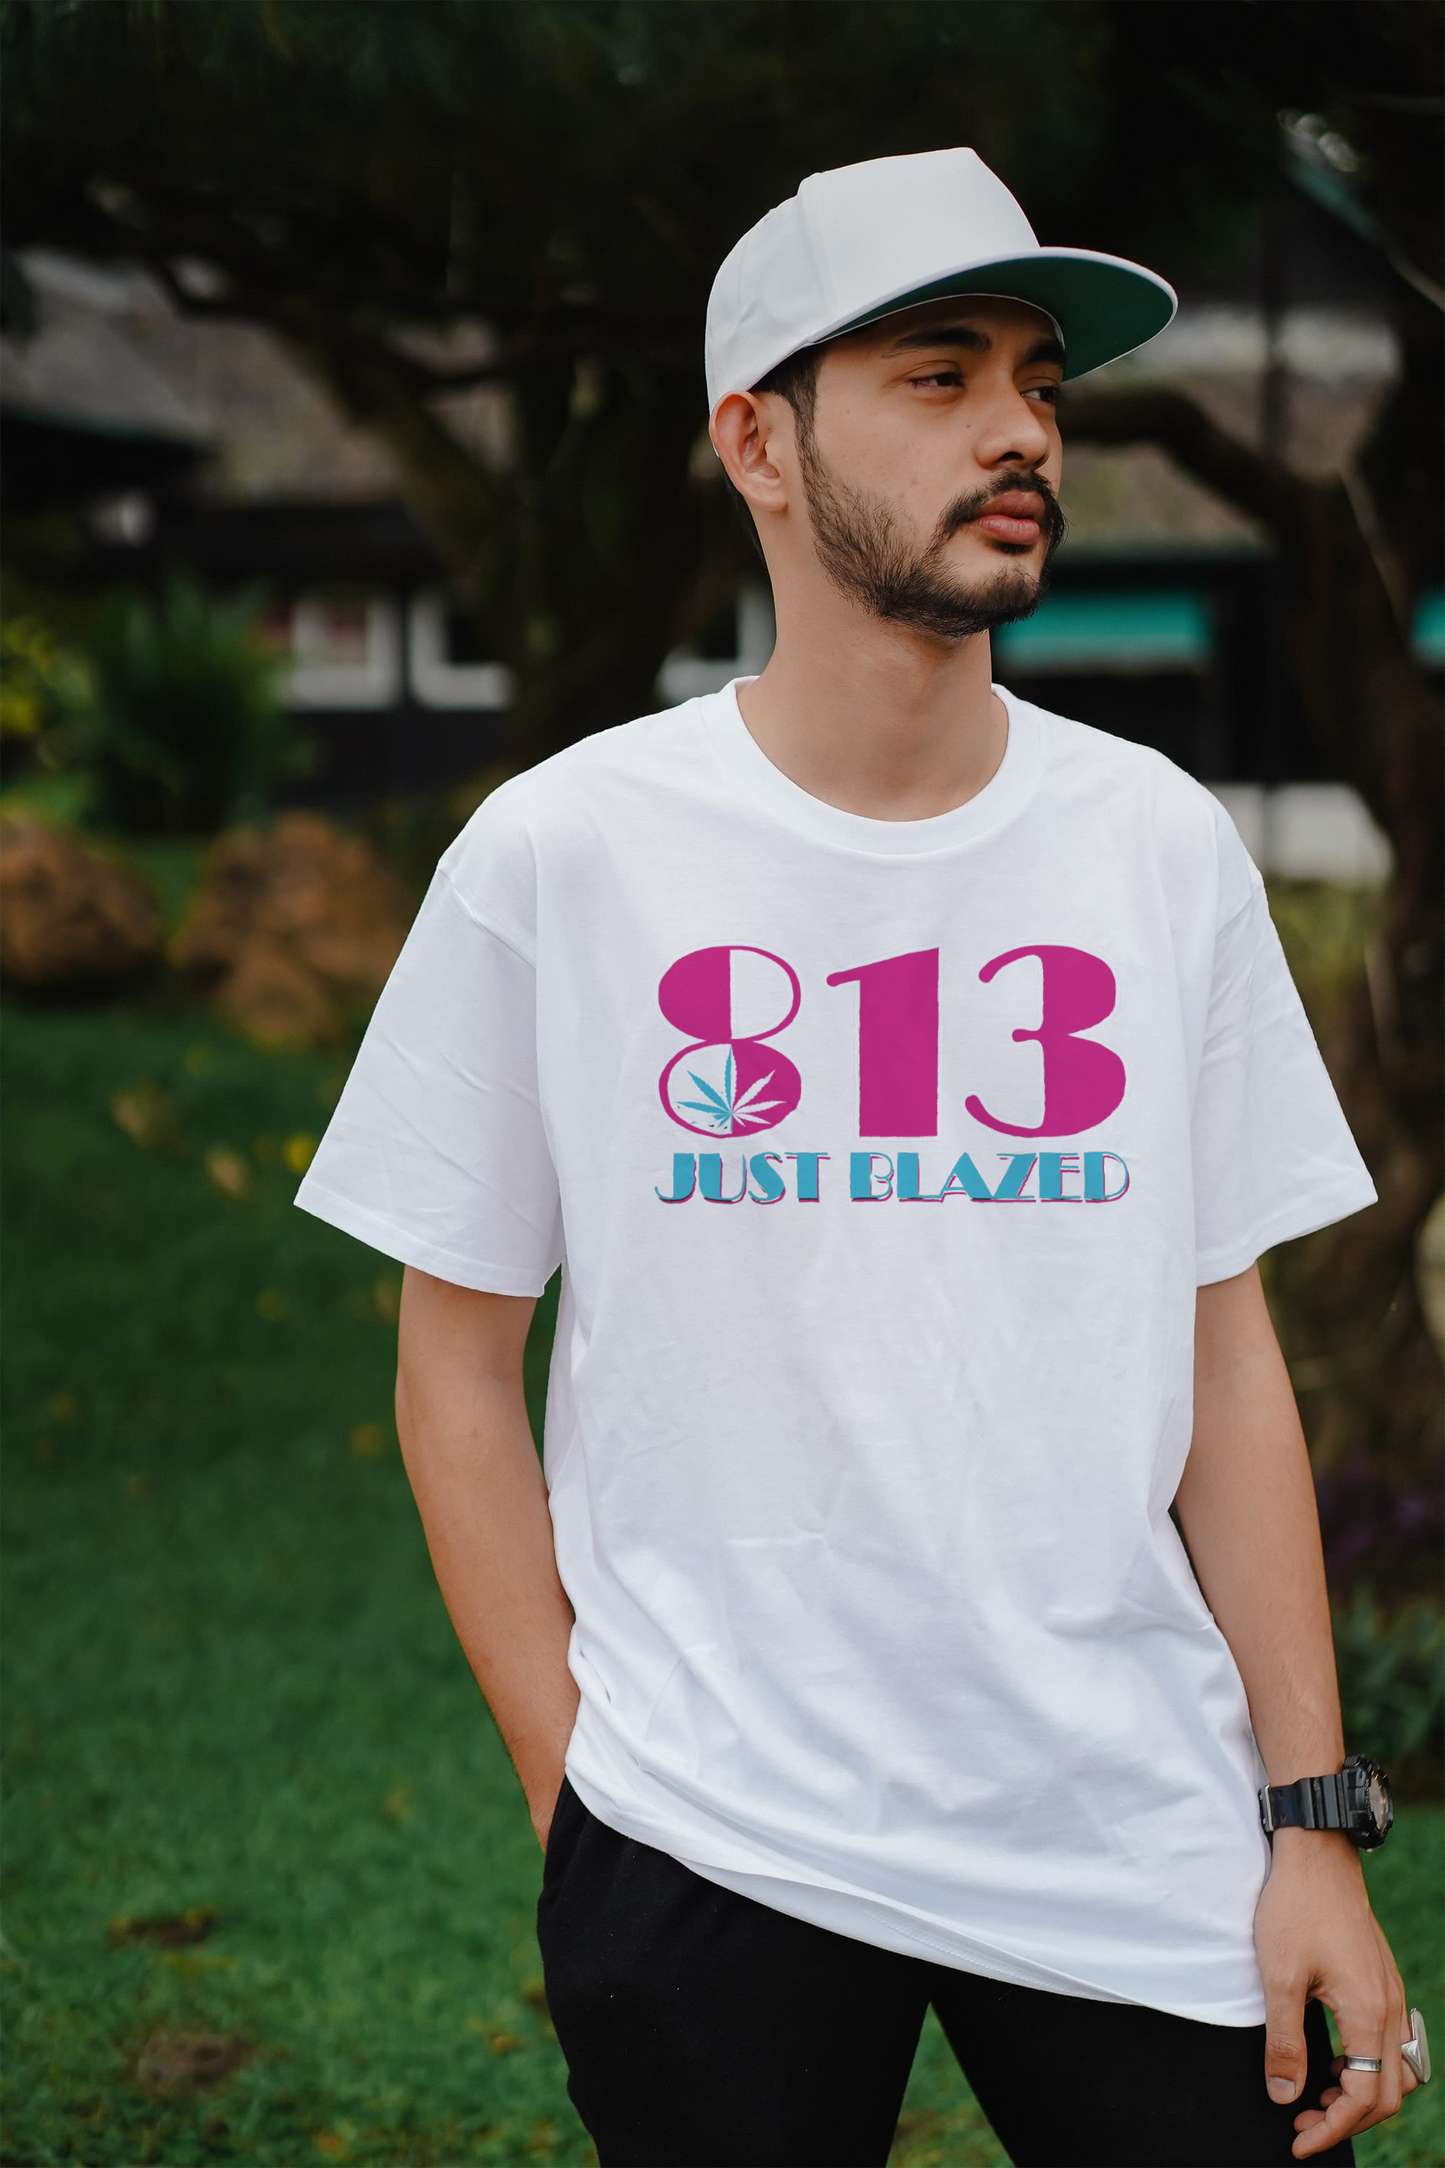 813 Just Blazed Shirt